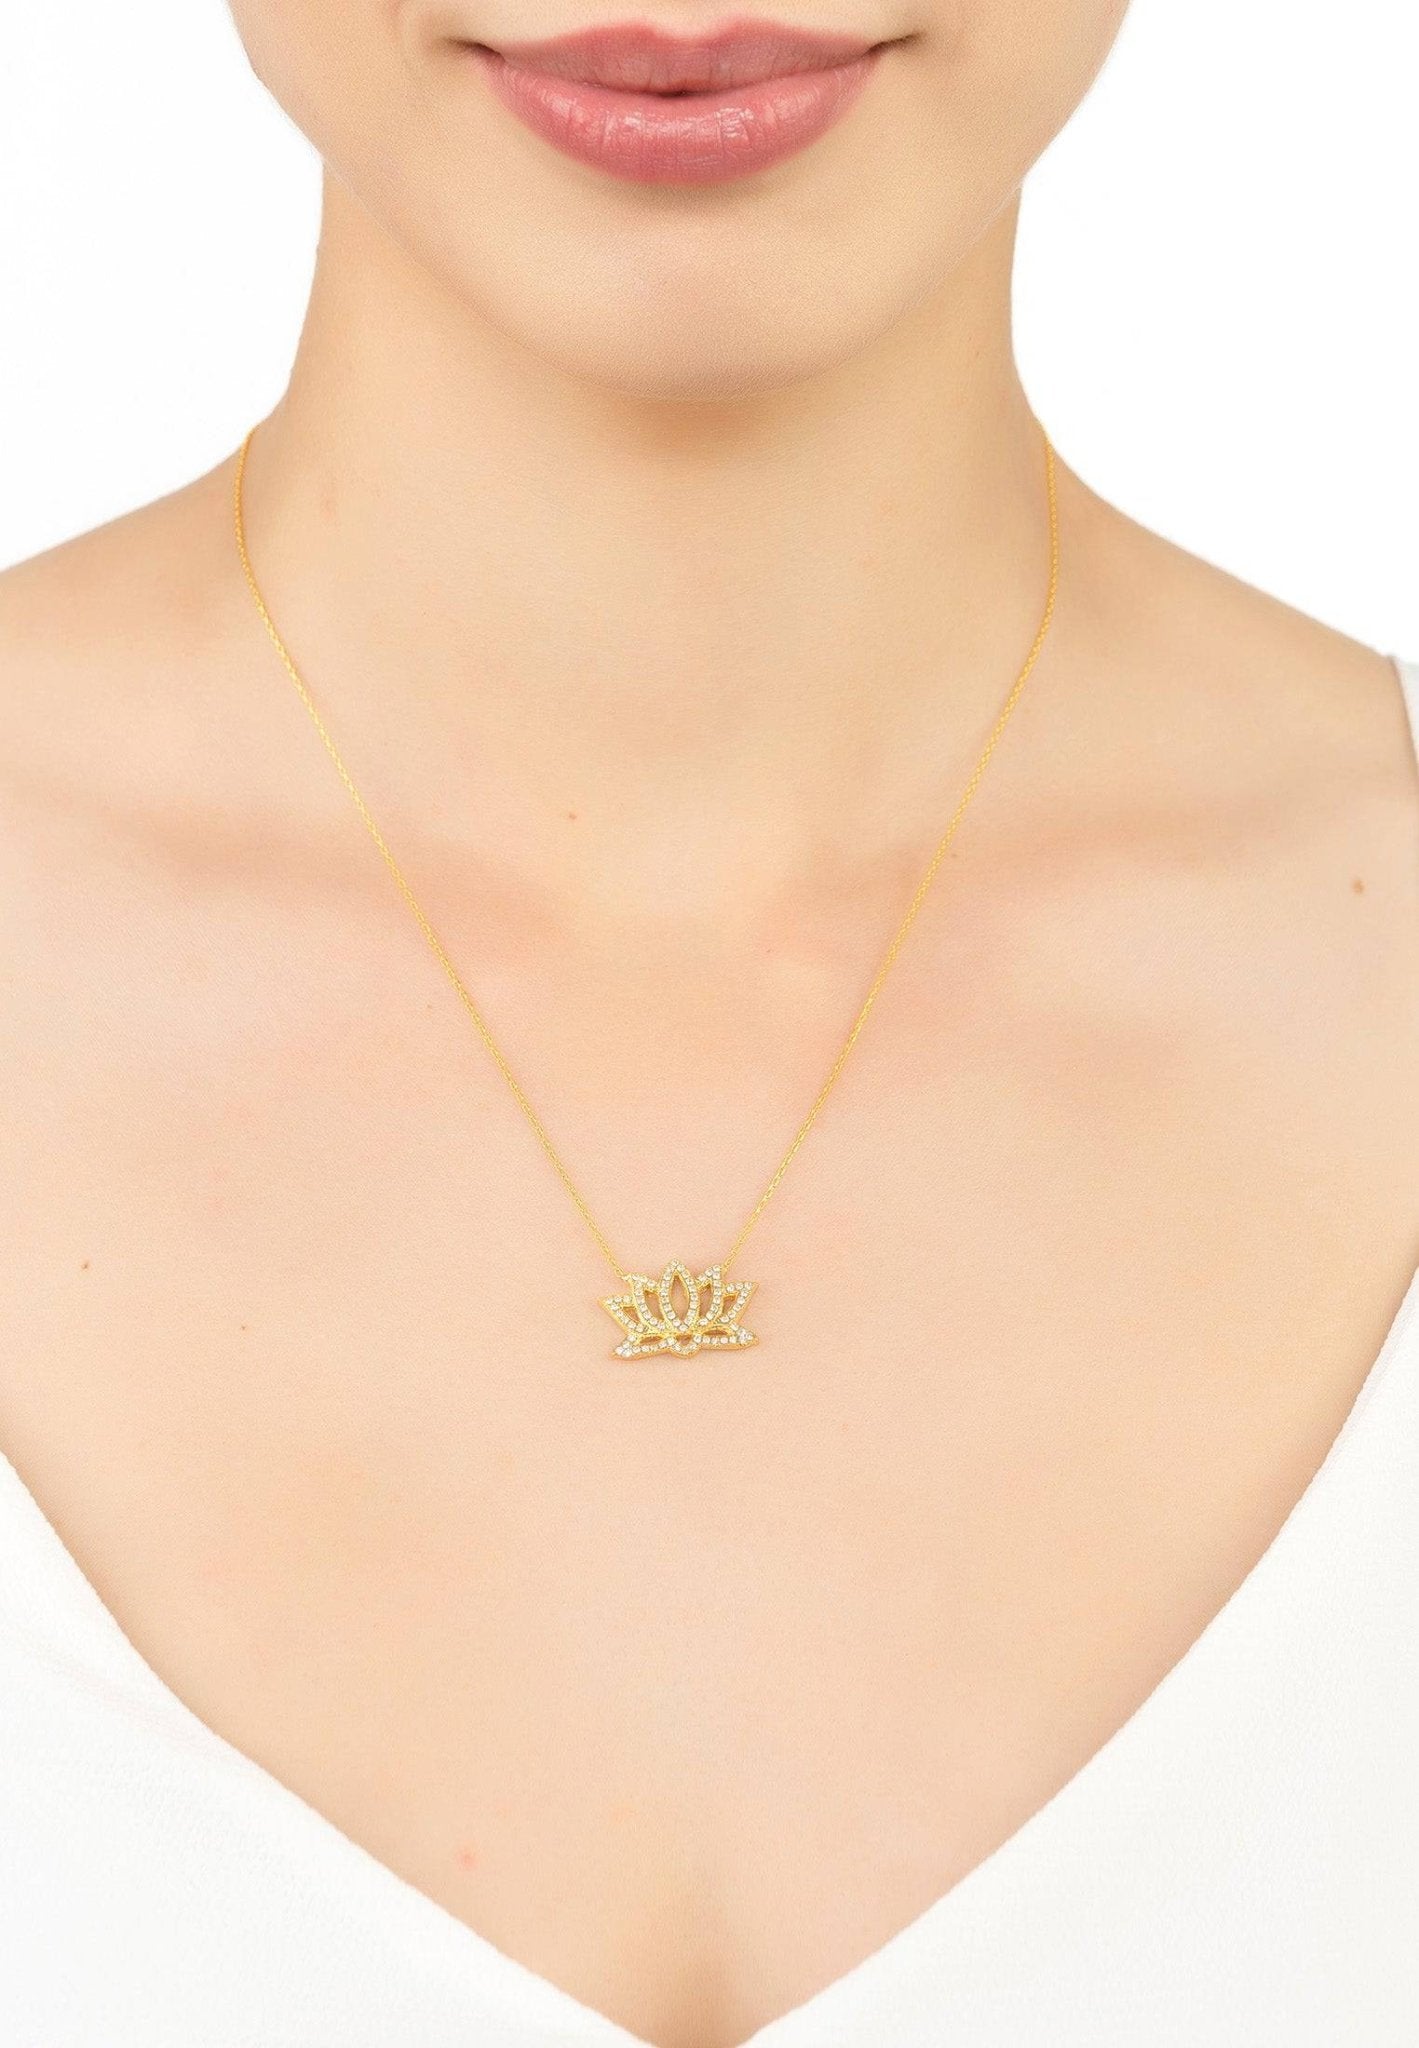 Lotus Flower Necklace Gold - LATELITA Necklaces